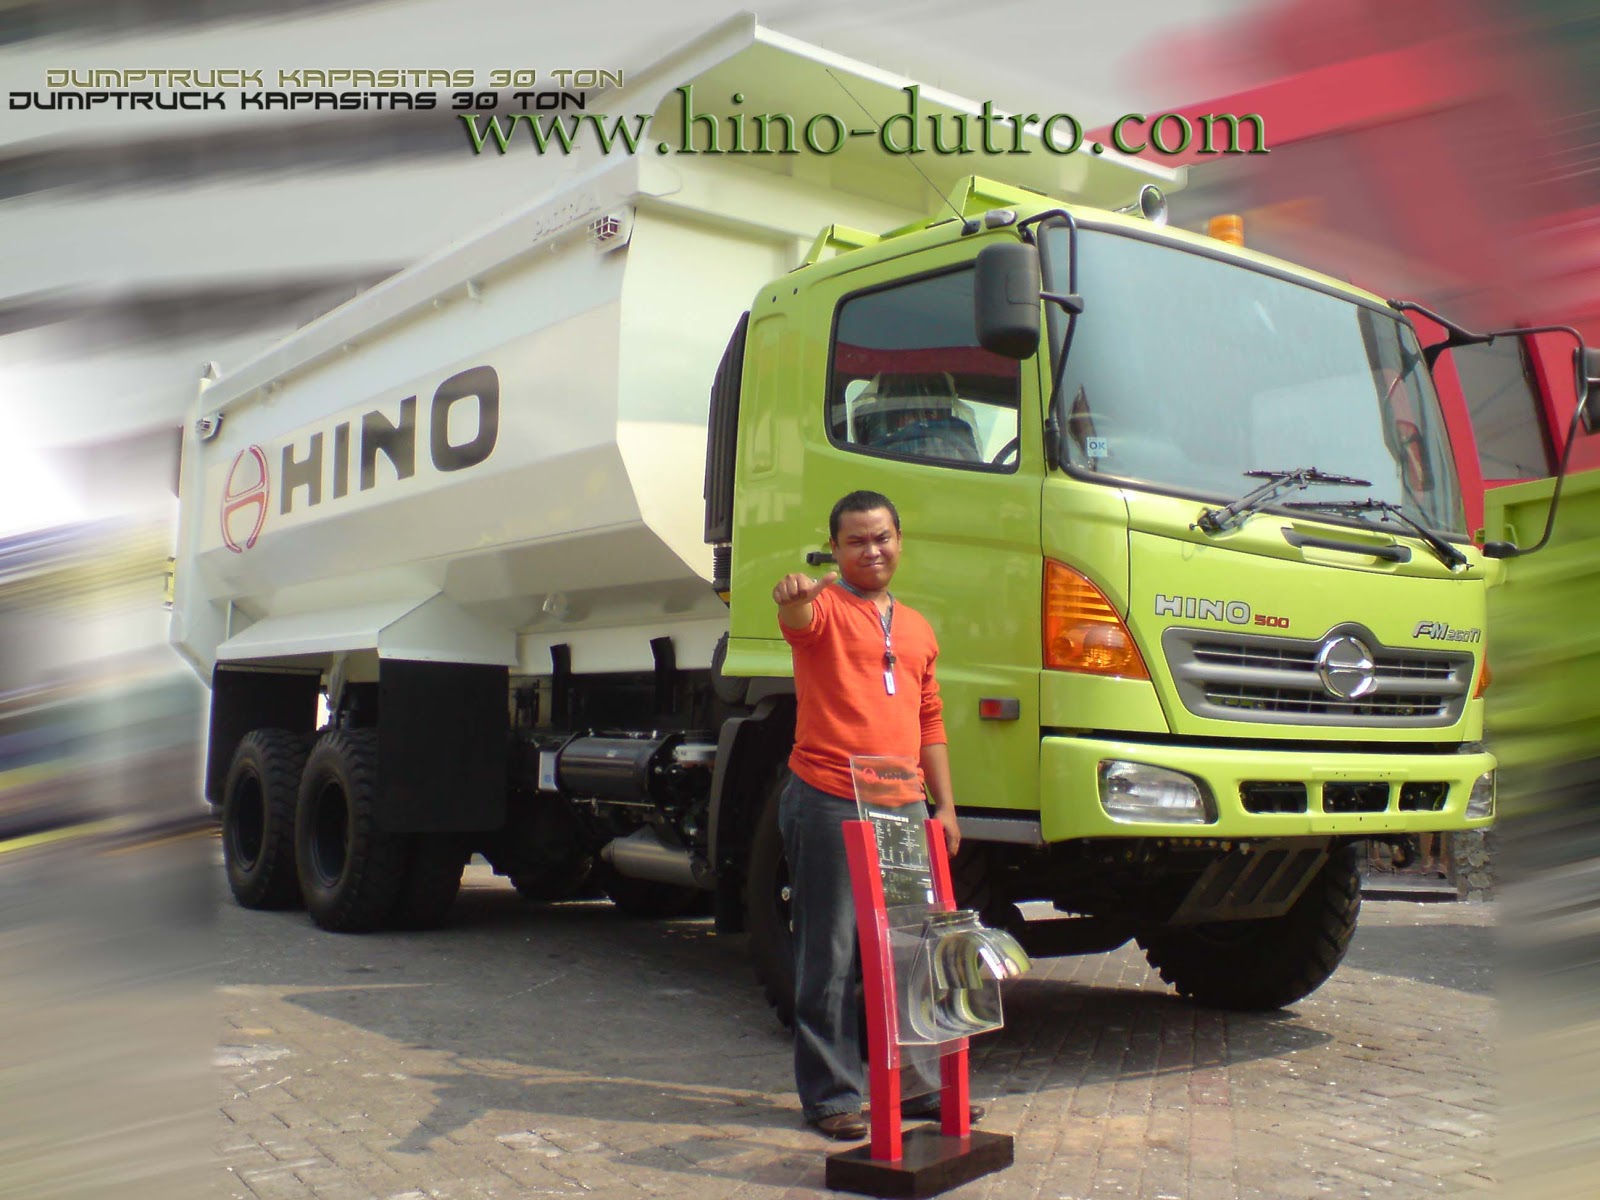 Sales Product HINO Area Sumatera Barat TRUCK HINO LOHAN SERIES